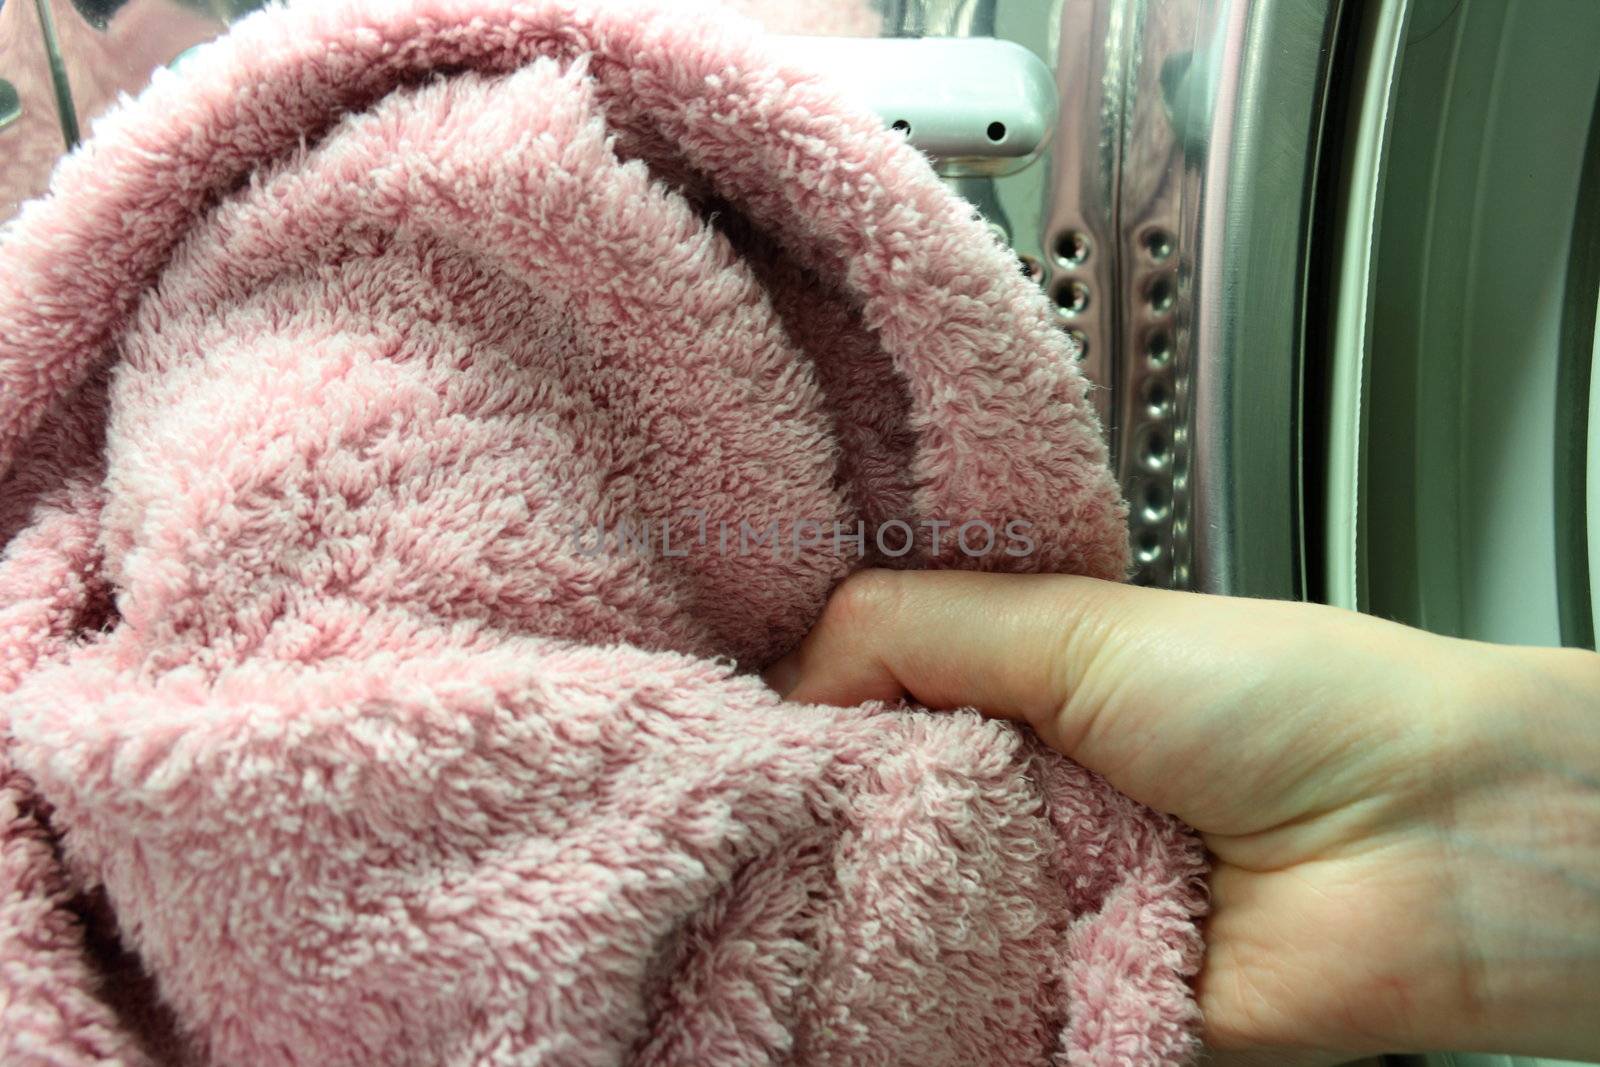 inside of washing machine hang holding towel